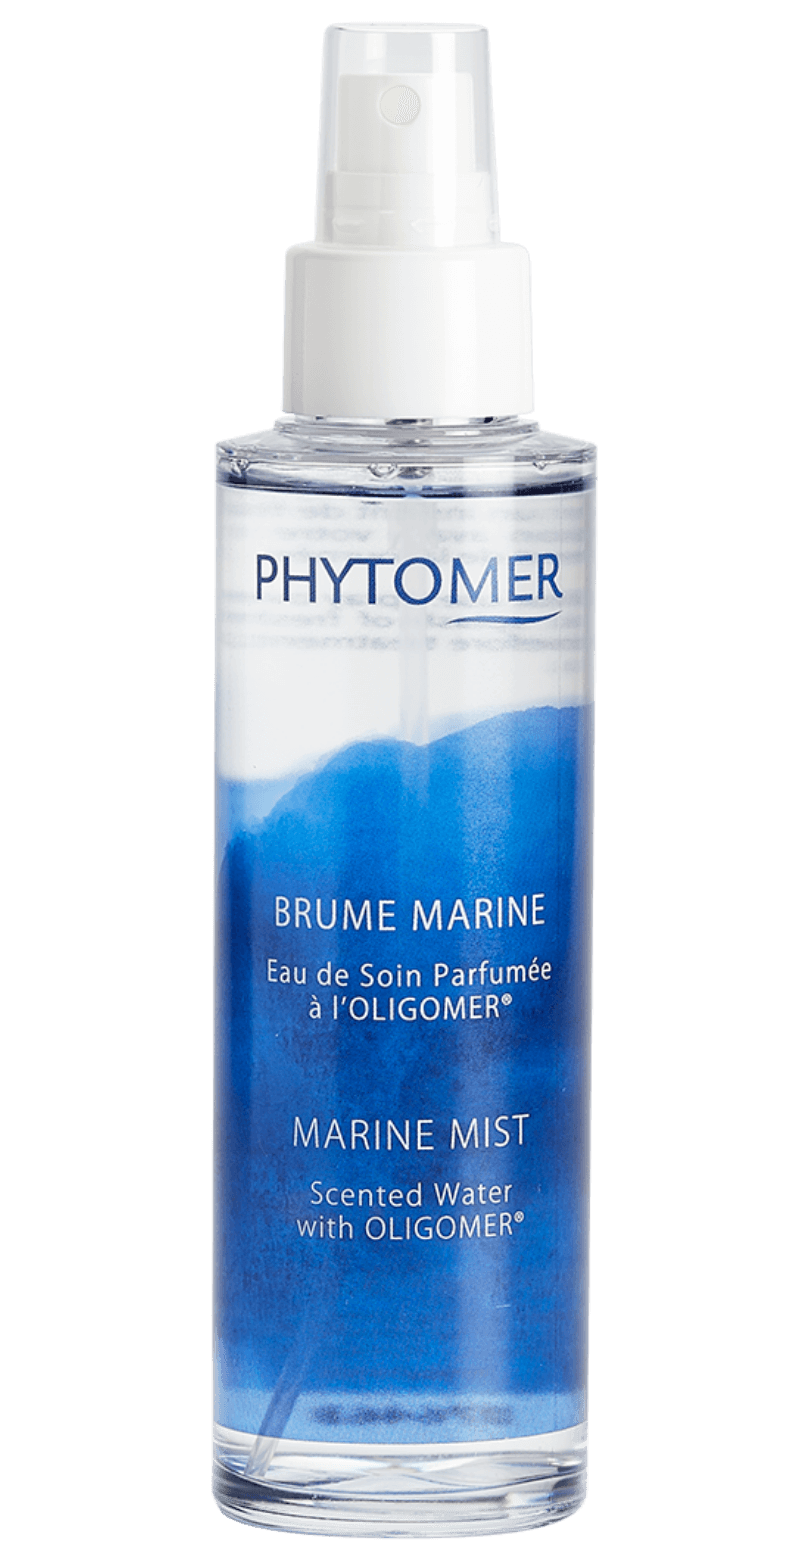 's Phytomer MARINE MIST Scented Water with Oligomer - Bellini's Skin and Parfumerie 